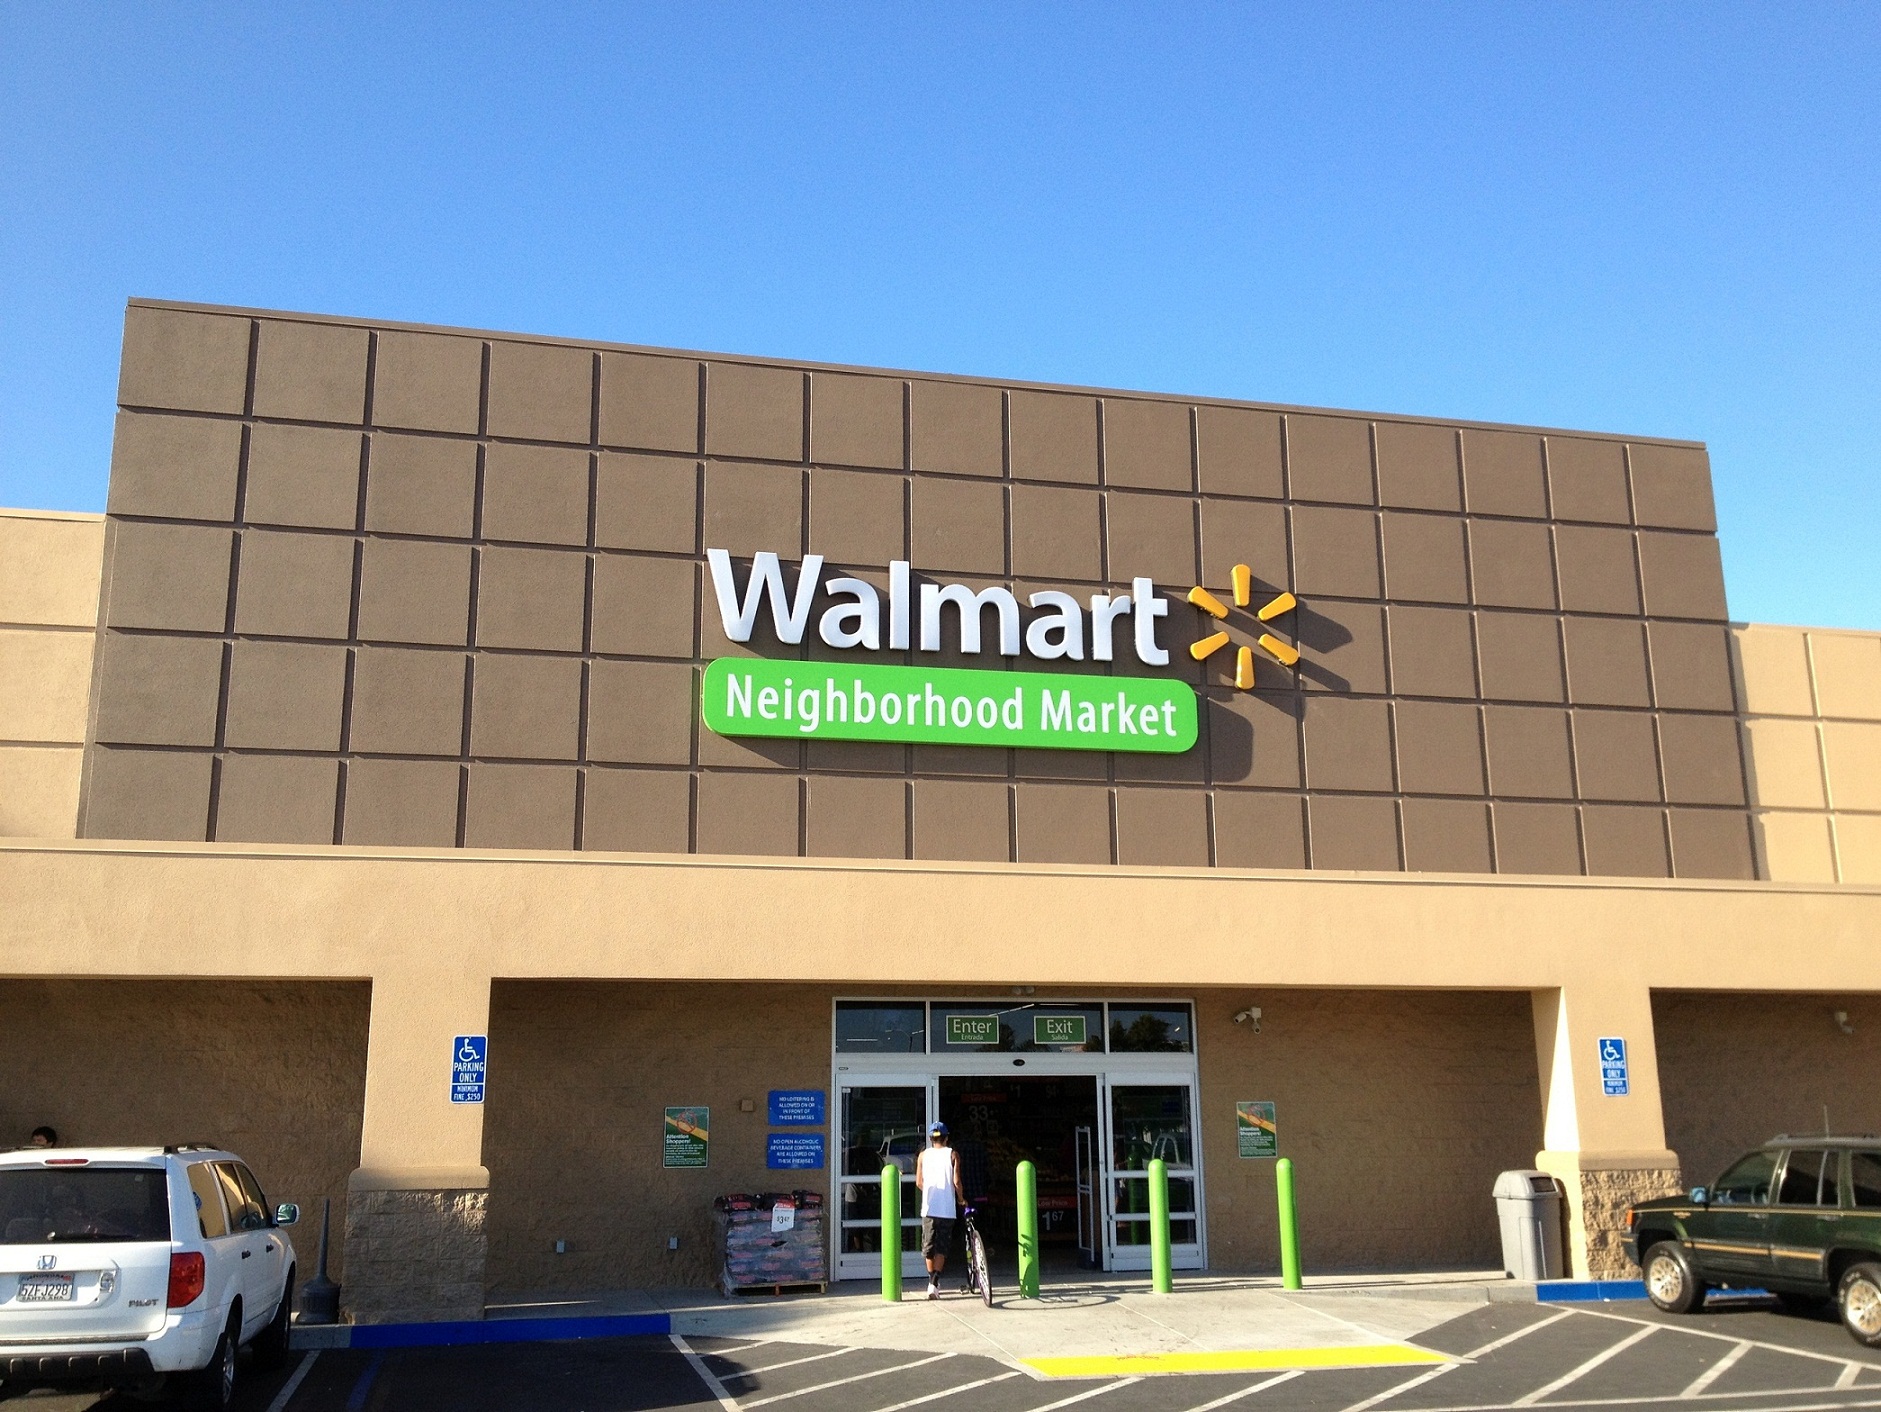 the entrance of Walmart